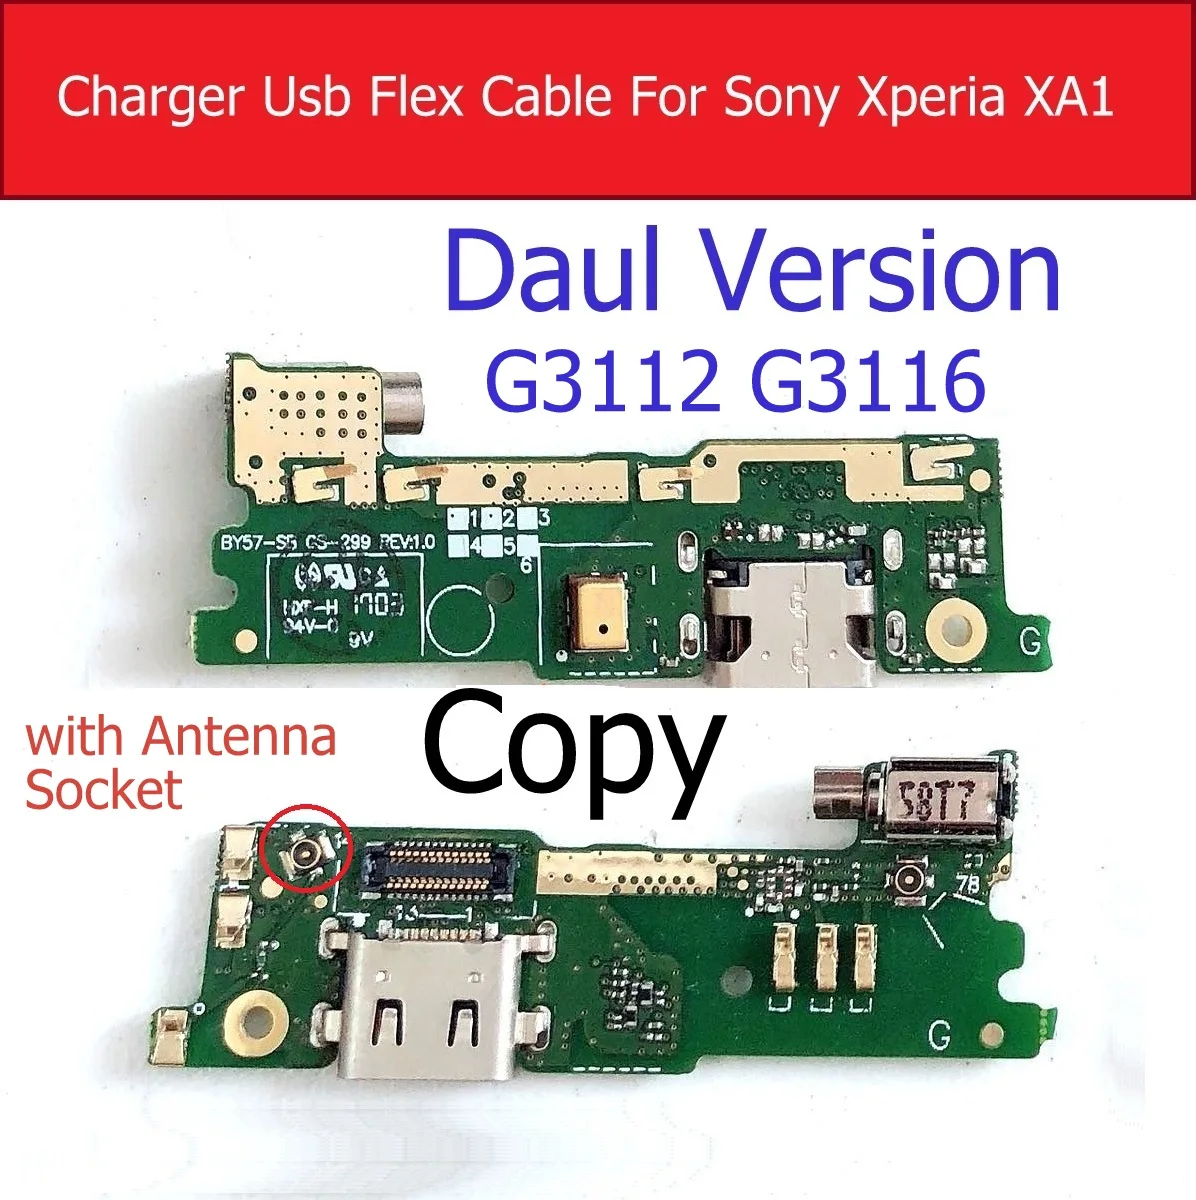 Зарядное устройство USB плата для sony Xperia XA/XA1/XA1 Ultra/XA2 Ultra/XA1 Plus G3121/G3112/G3421/G3412/F3111 зарядная док-станция - Цвет: XA1-Daul-Copy